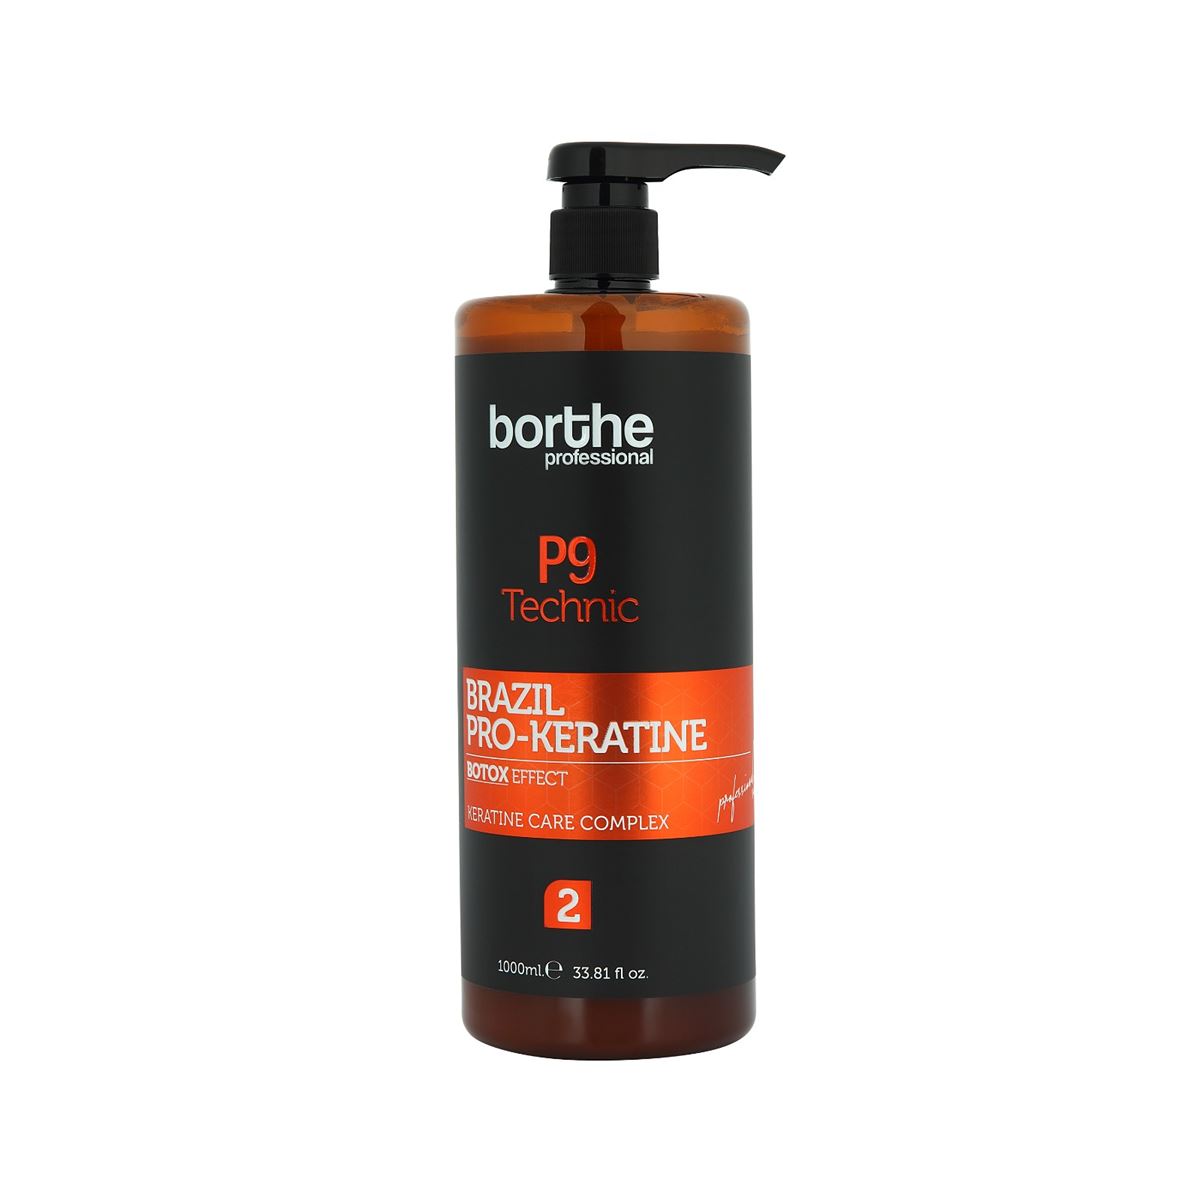 Borthe P9 Technic Brazil Pro-Keratin Botox Effect No:2 1000ml